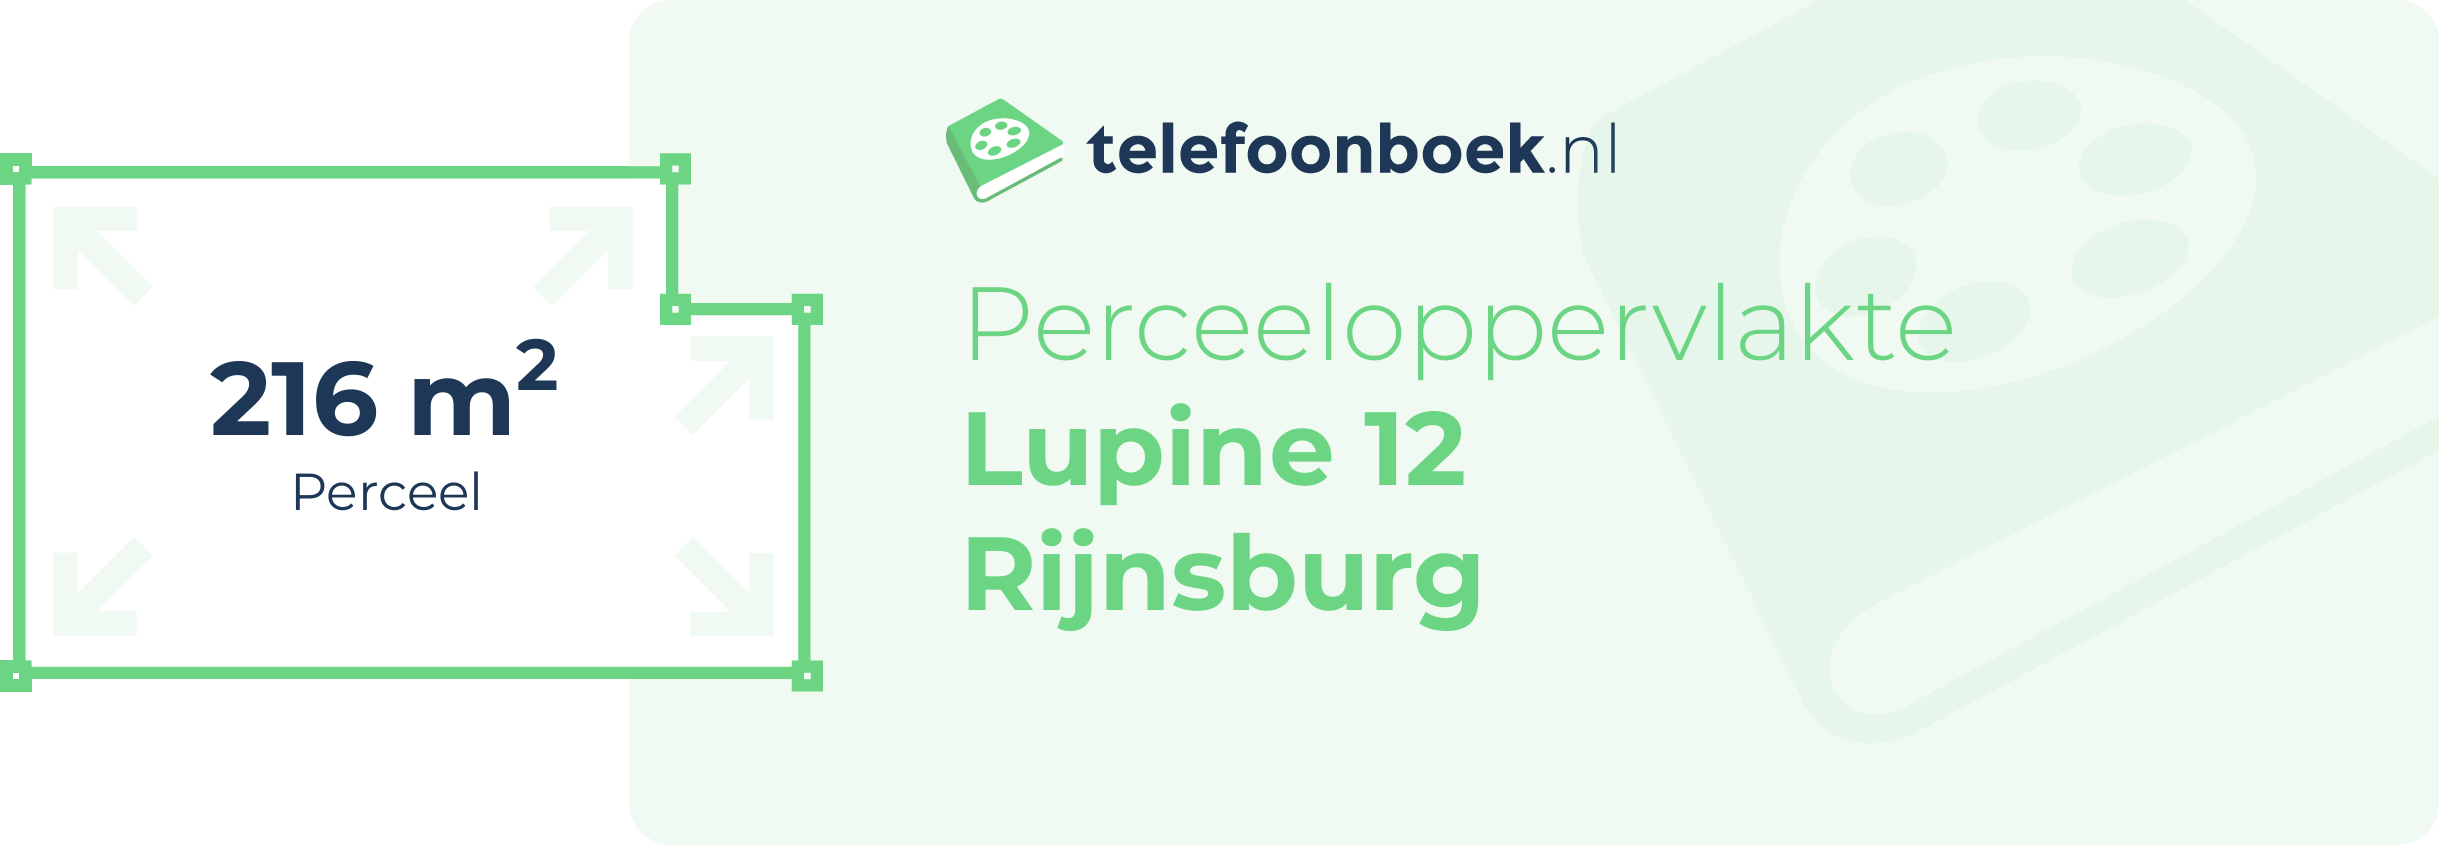 Perceeloppervlakte Lupine 12 Rijnsburg